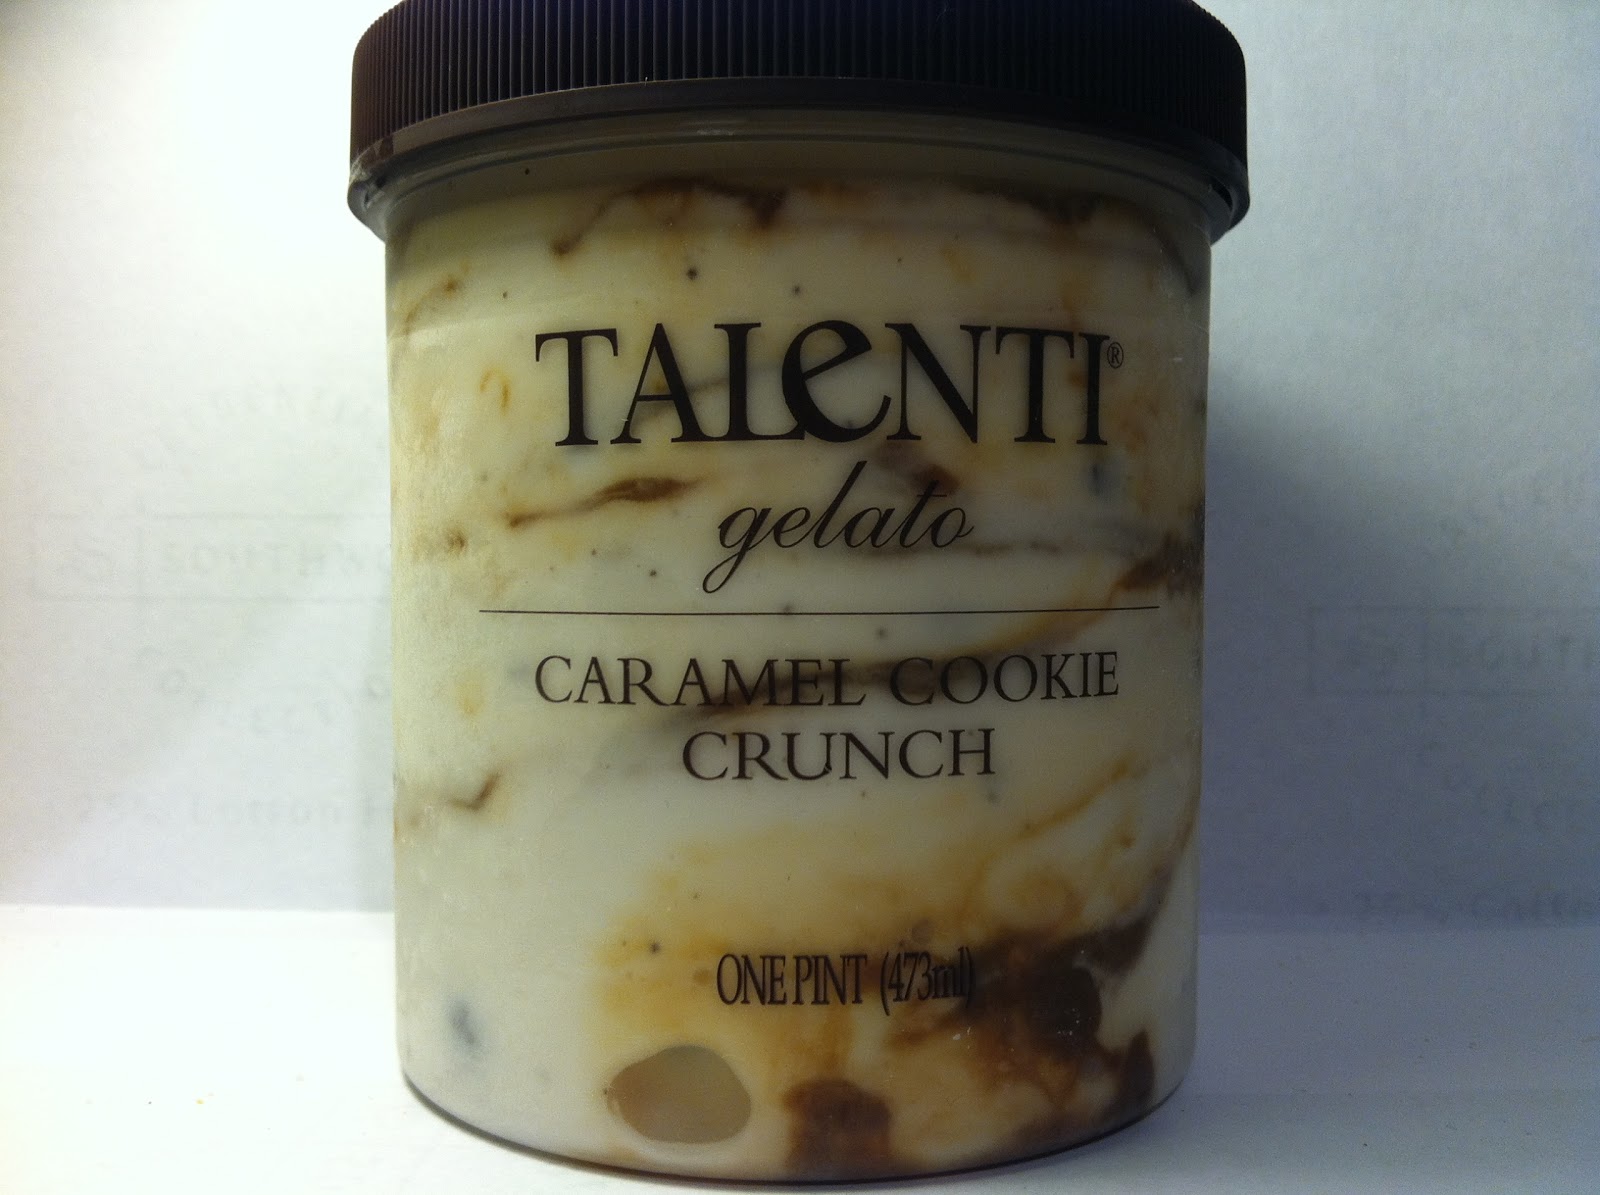 Talenti+Caramel+Cookie+Crunch+Gelato.jpg